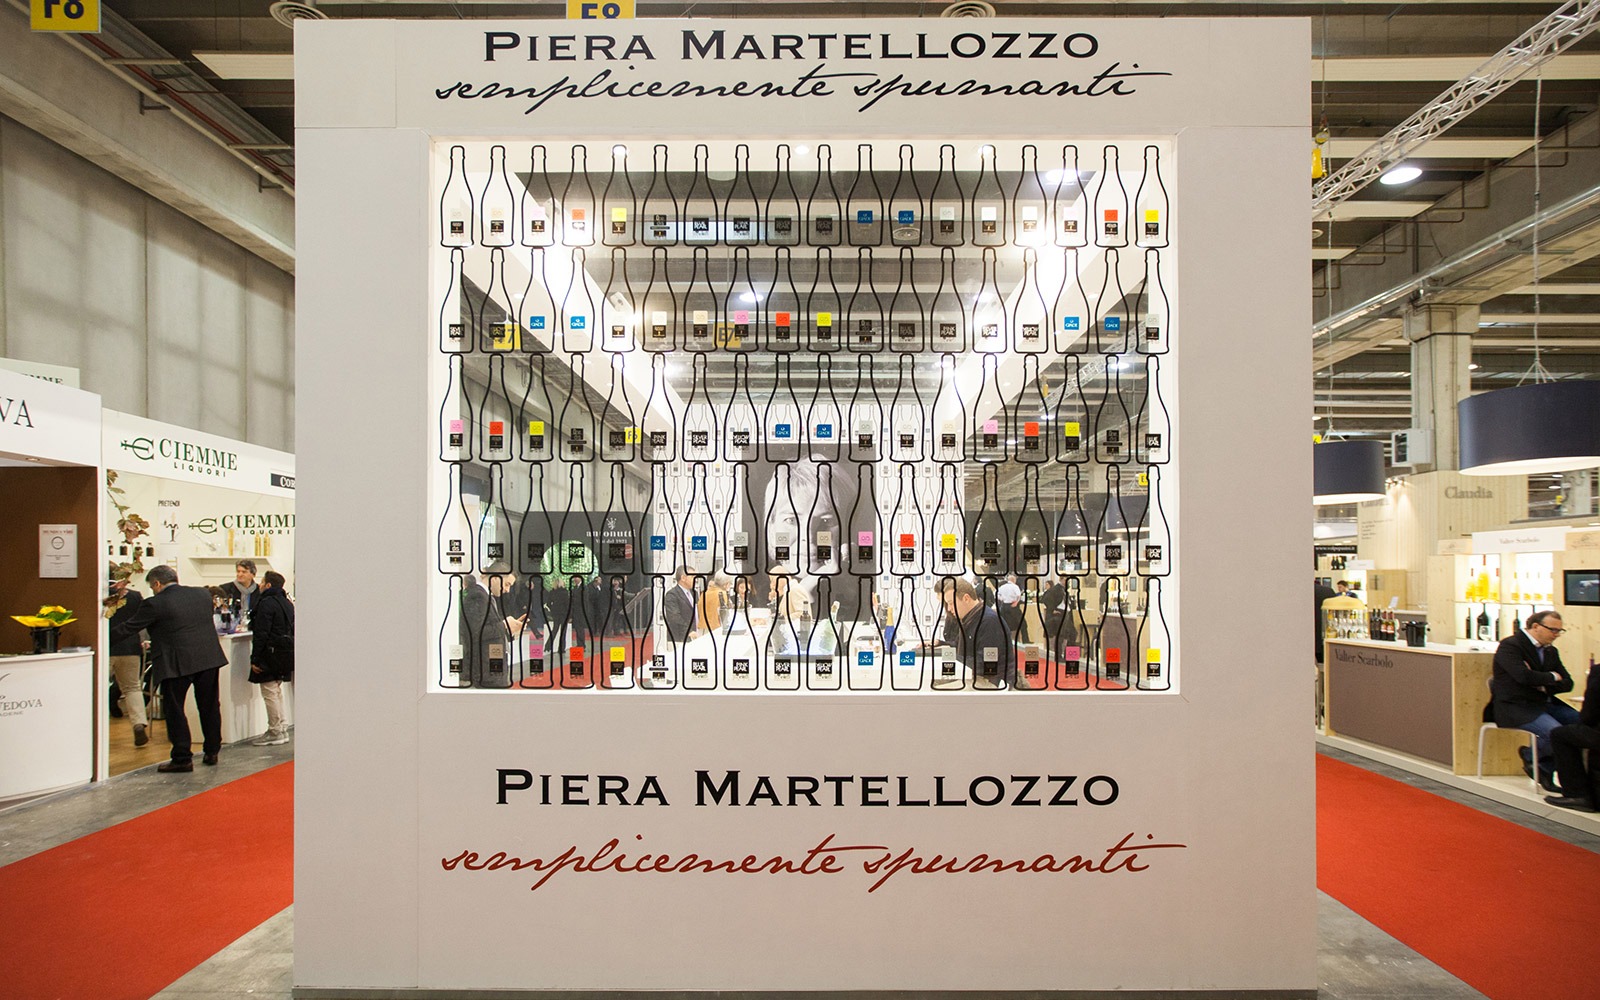 Piera Martellozzo Vinitaly 2013